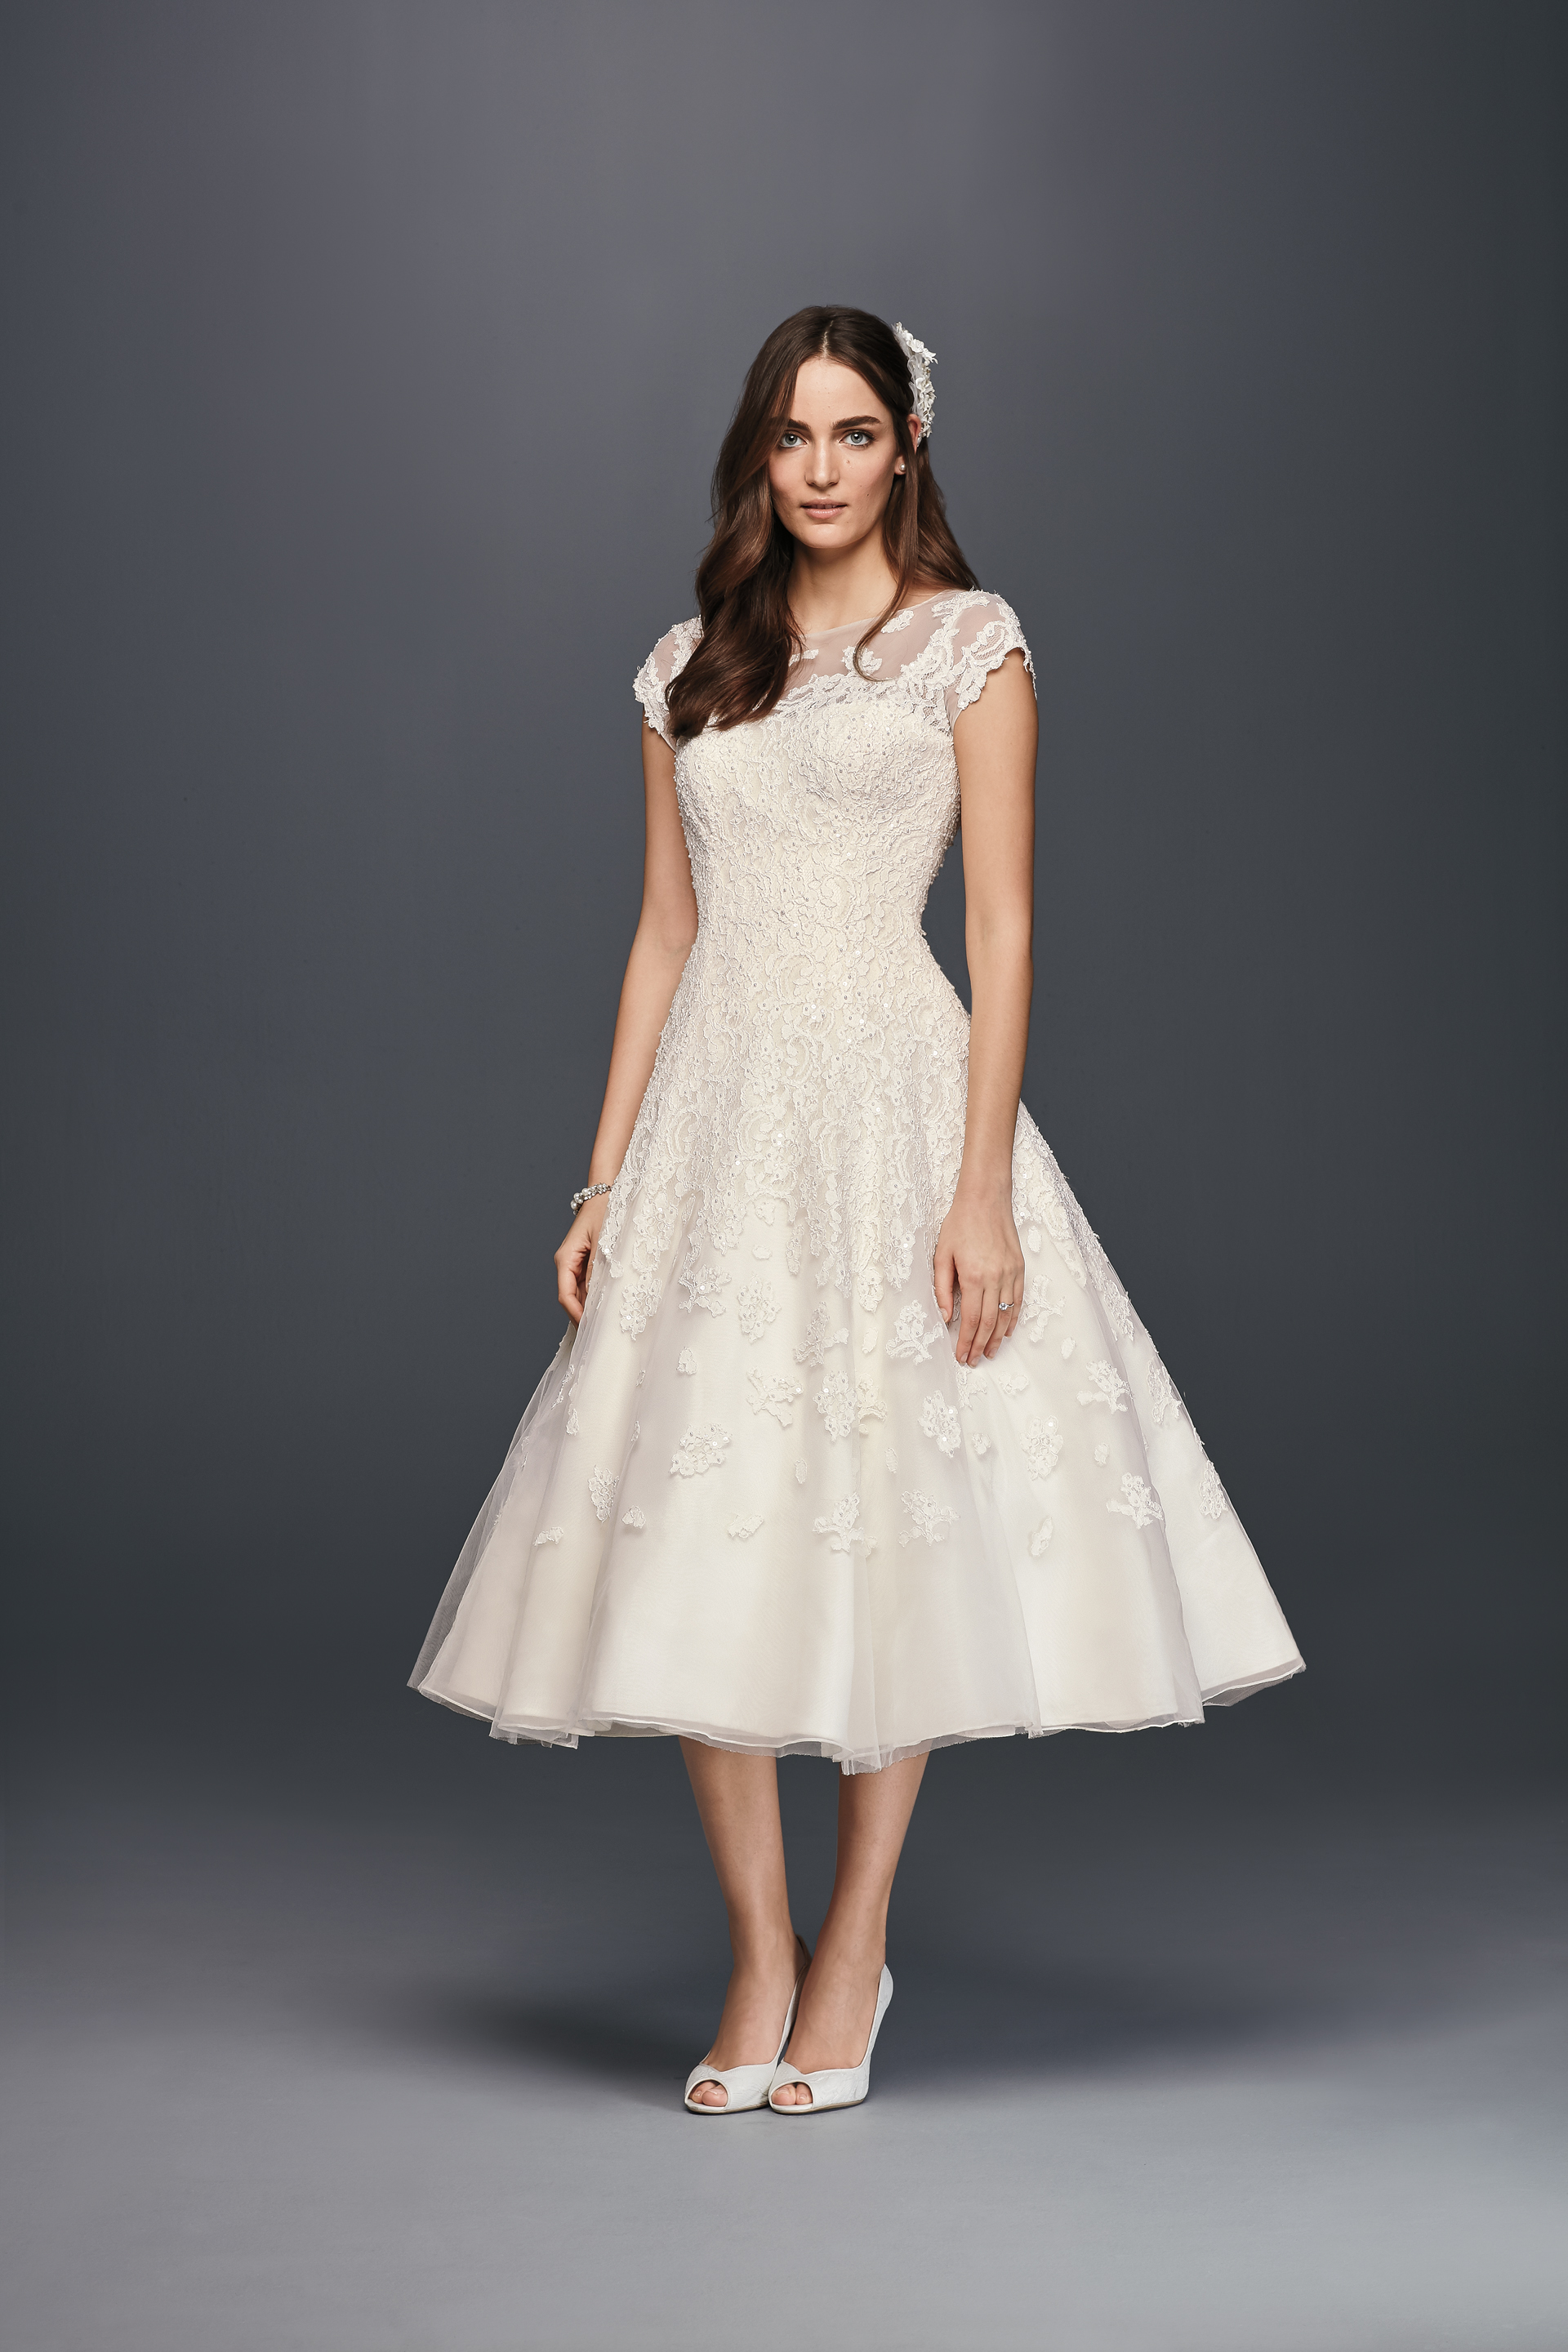 Call Sleeve Illusion Tea Length Wedding Dress with a neckline similar to Pippa Middleton's wedding dress. See more Pippa inspired wedding dresses on the David's Bridal blog.